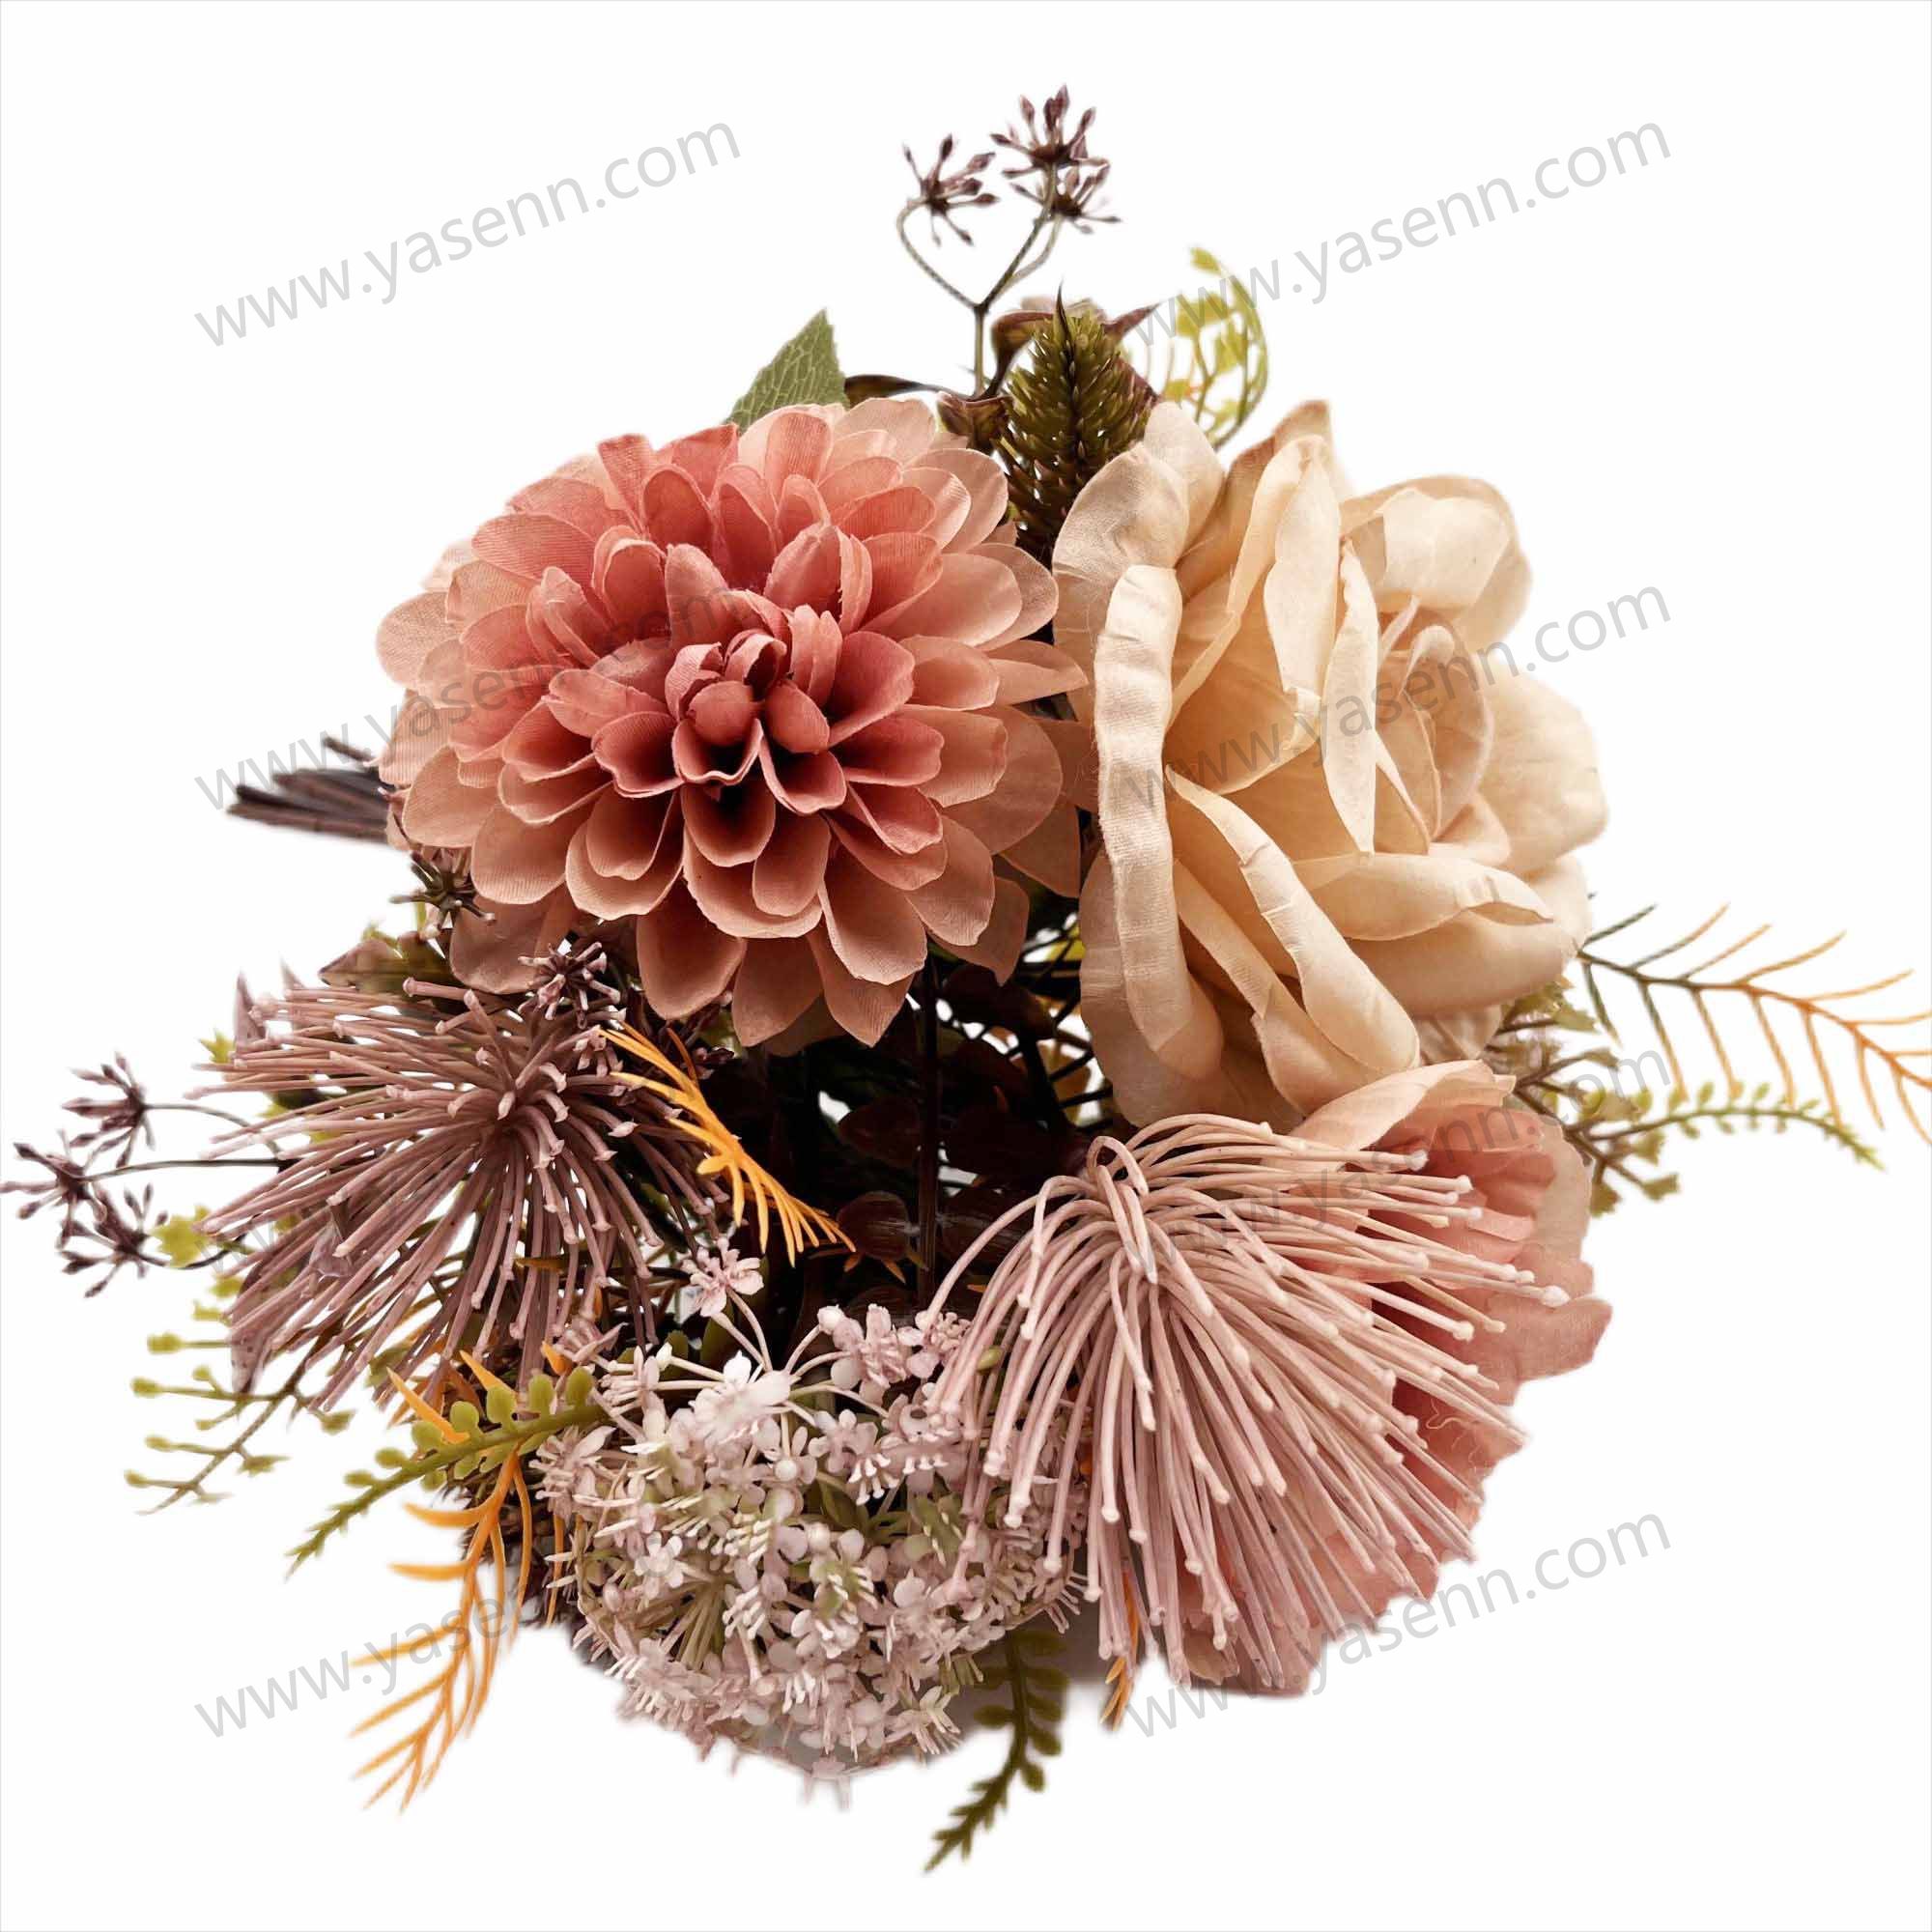 6 BRANCHES ROSE CHRYSANTHEMUM bridal bouquet artificial flowers YSB23180